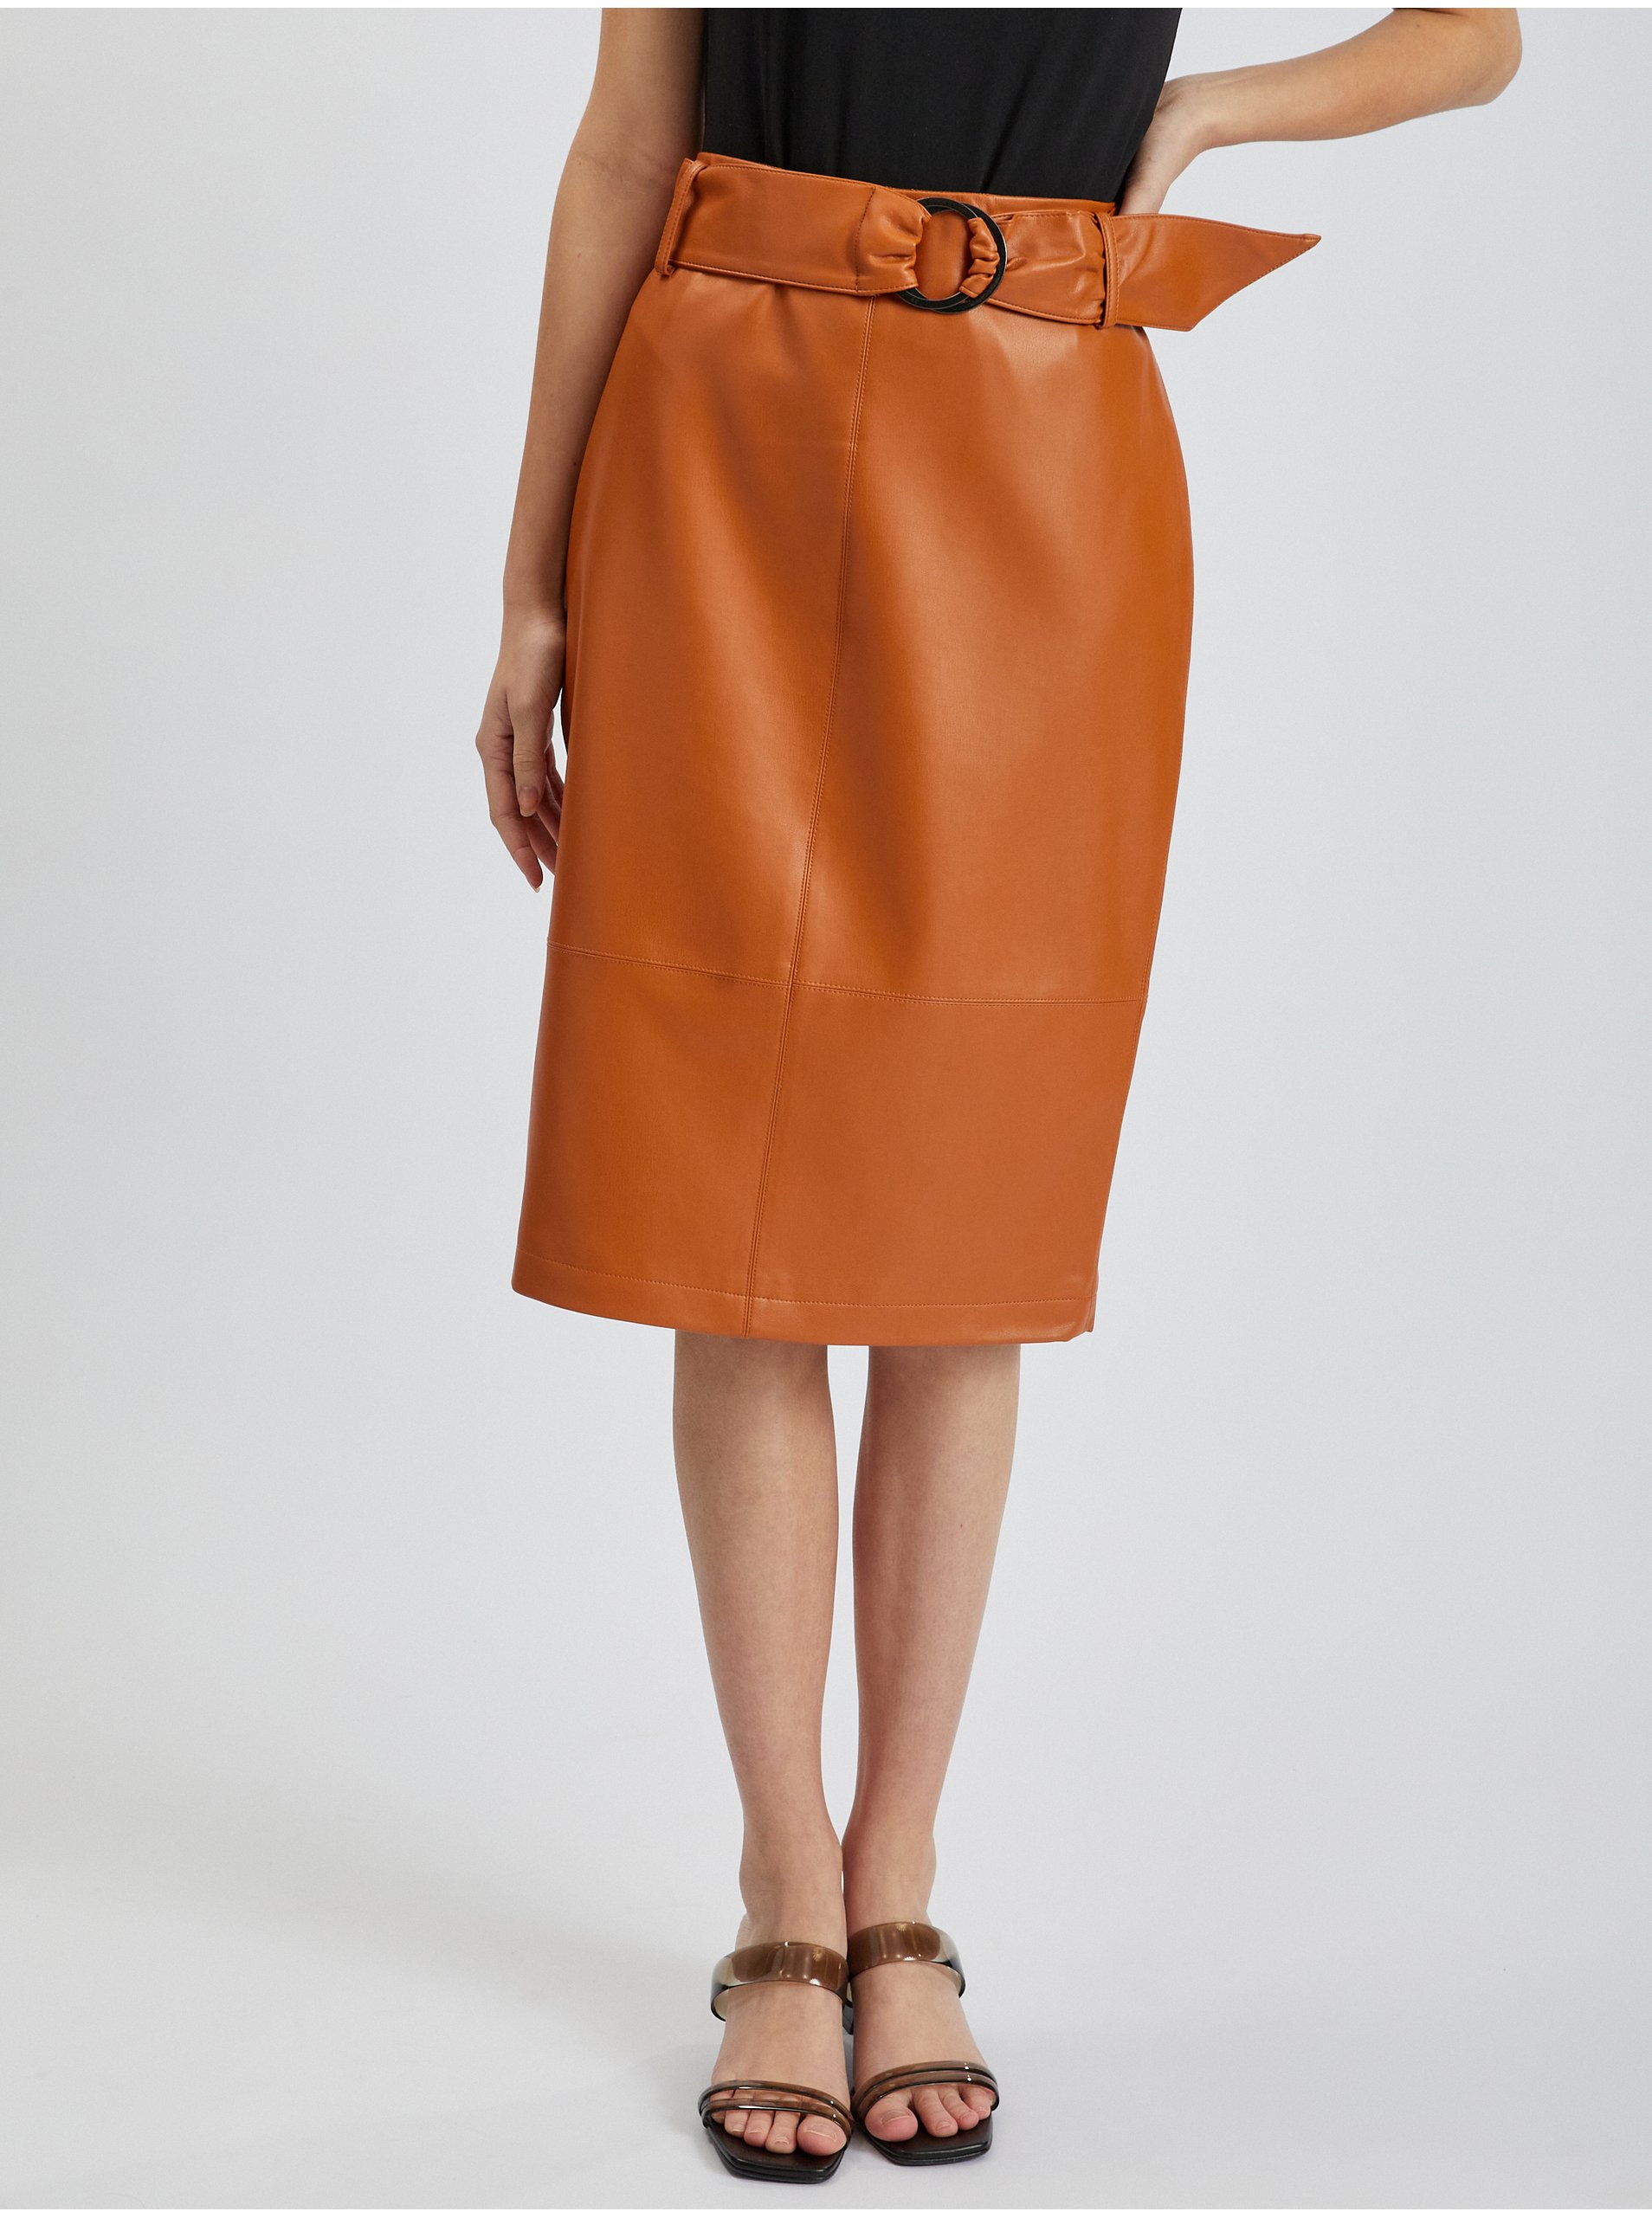 Orsay Brown Women's Pencil Leatherette Skirt - Women